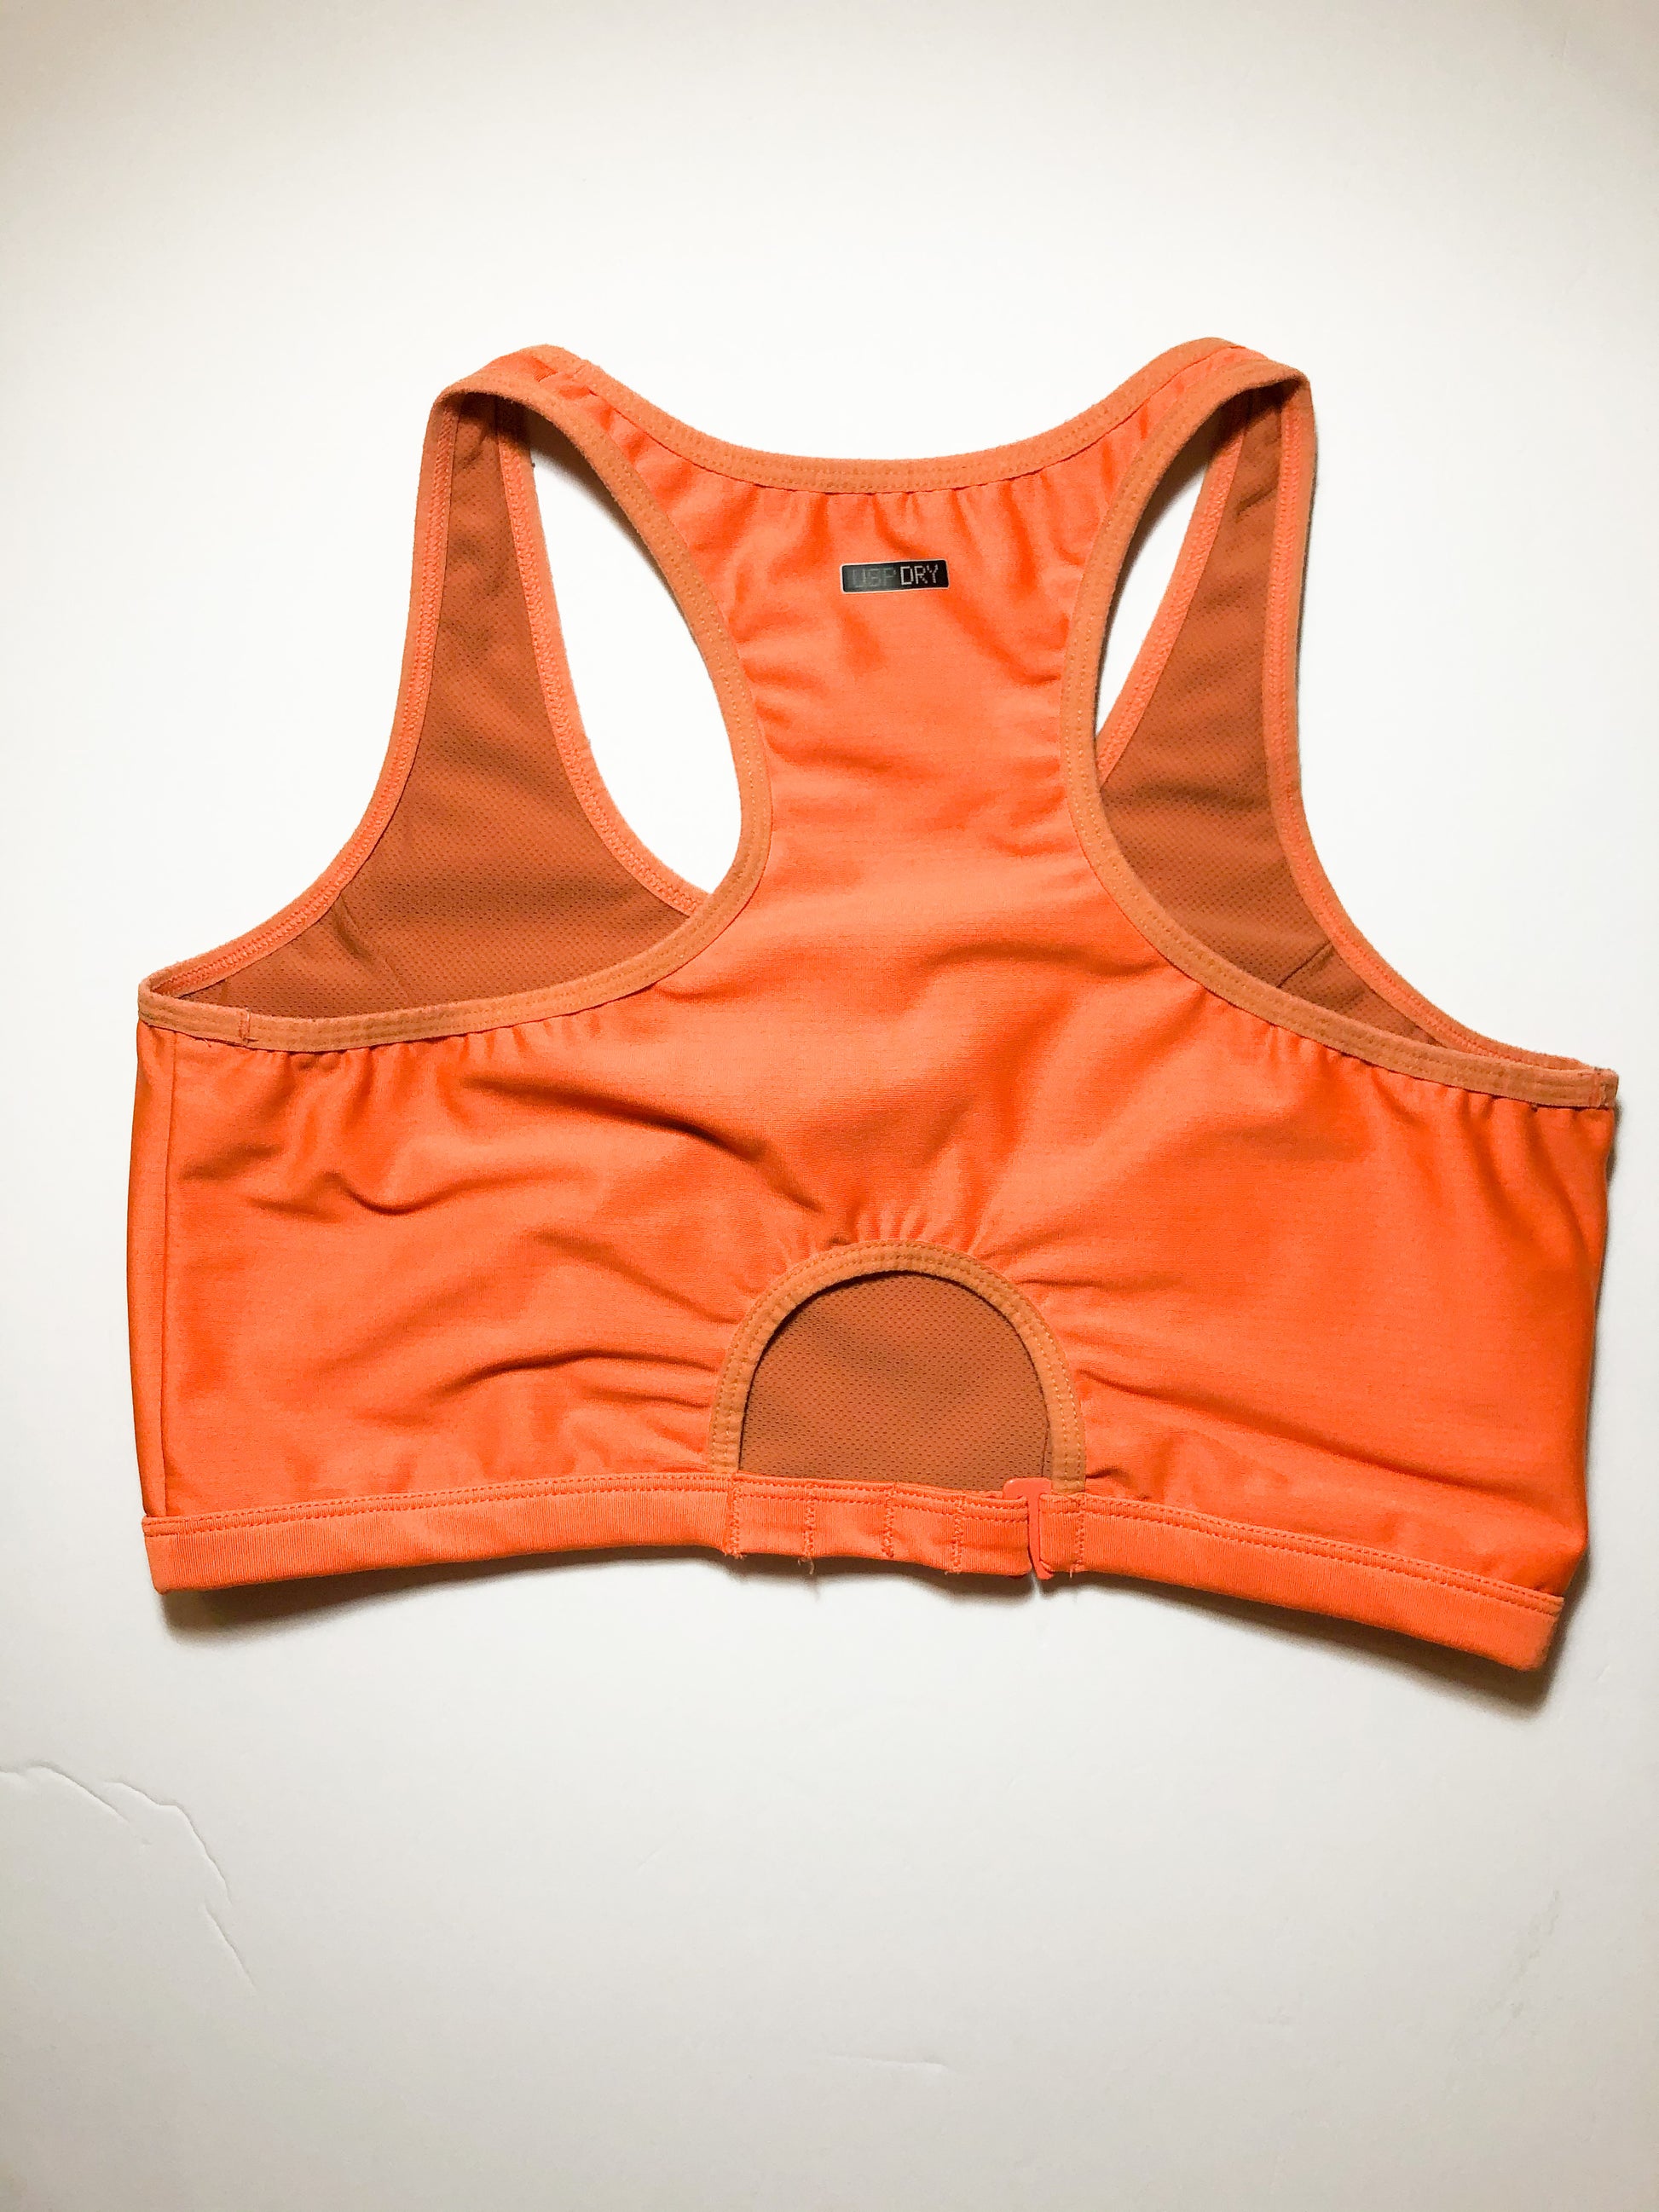 Puma Orange Sports Bra with Back Cutout - S/M – Le Prix Fashion